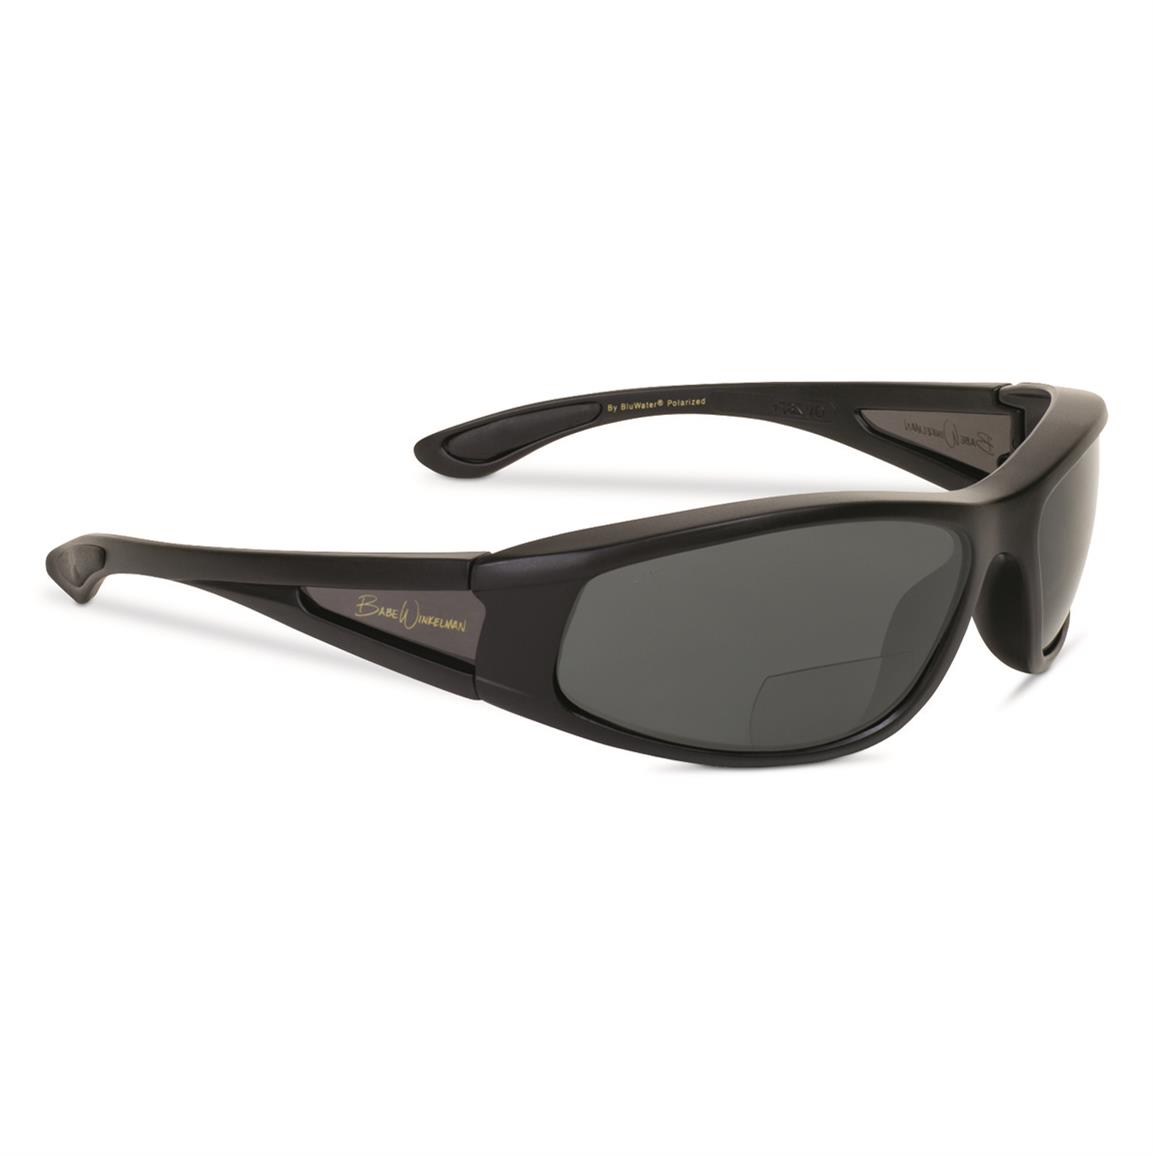 Global Vision Men's Babe Winkelman Edition 2 Bifocal Sunglasses, Black